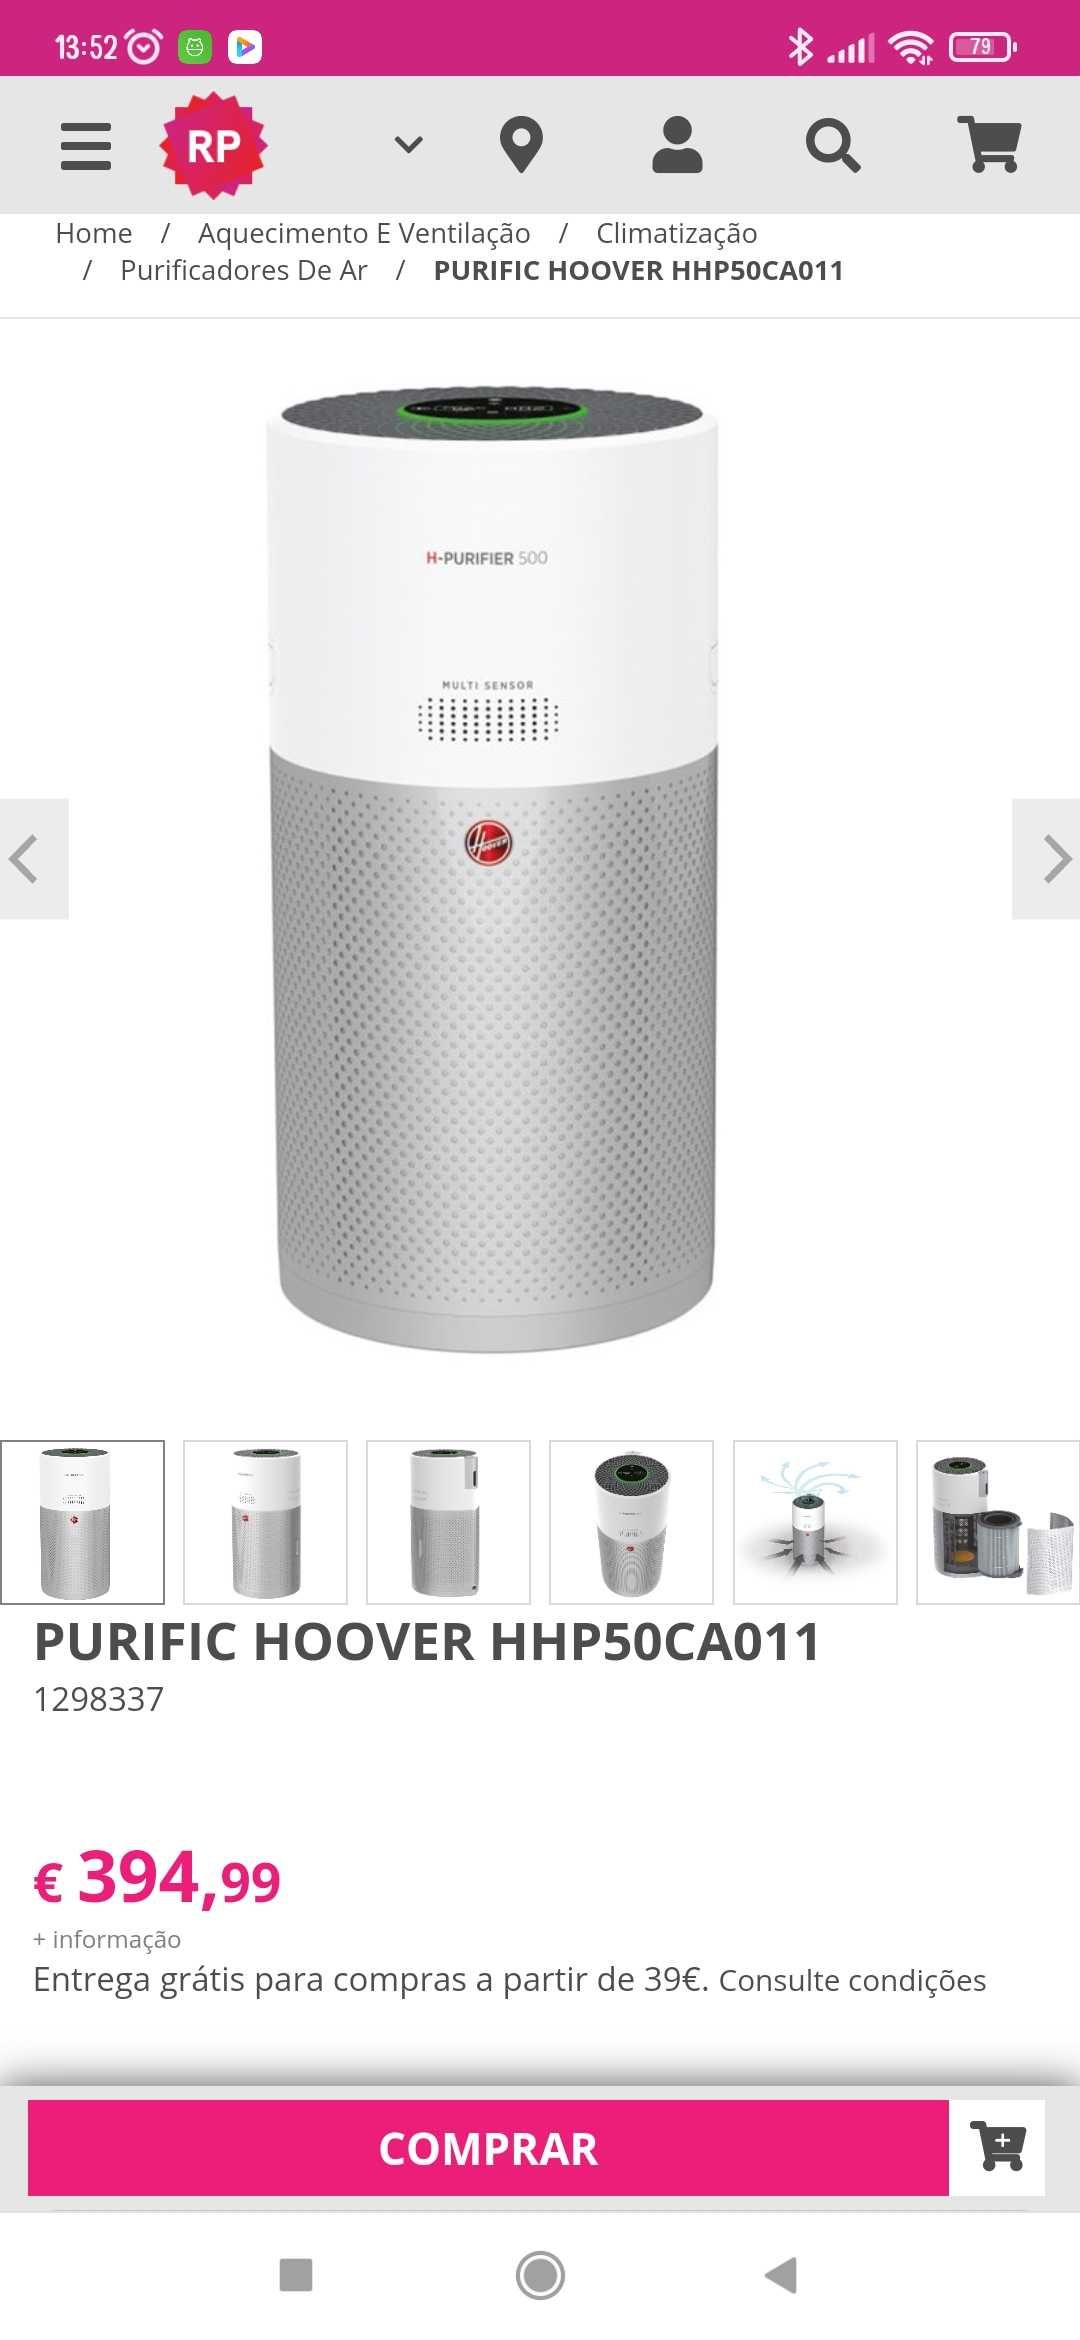 Purificador de ar Hoover H-Purifier 500